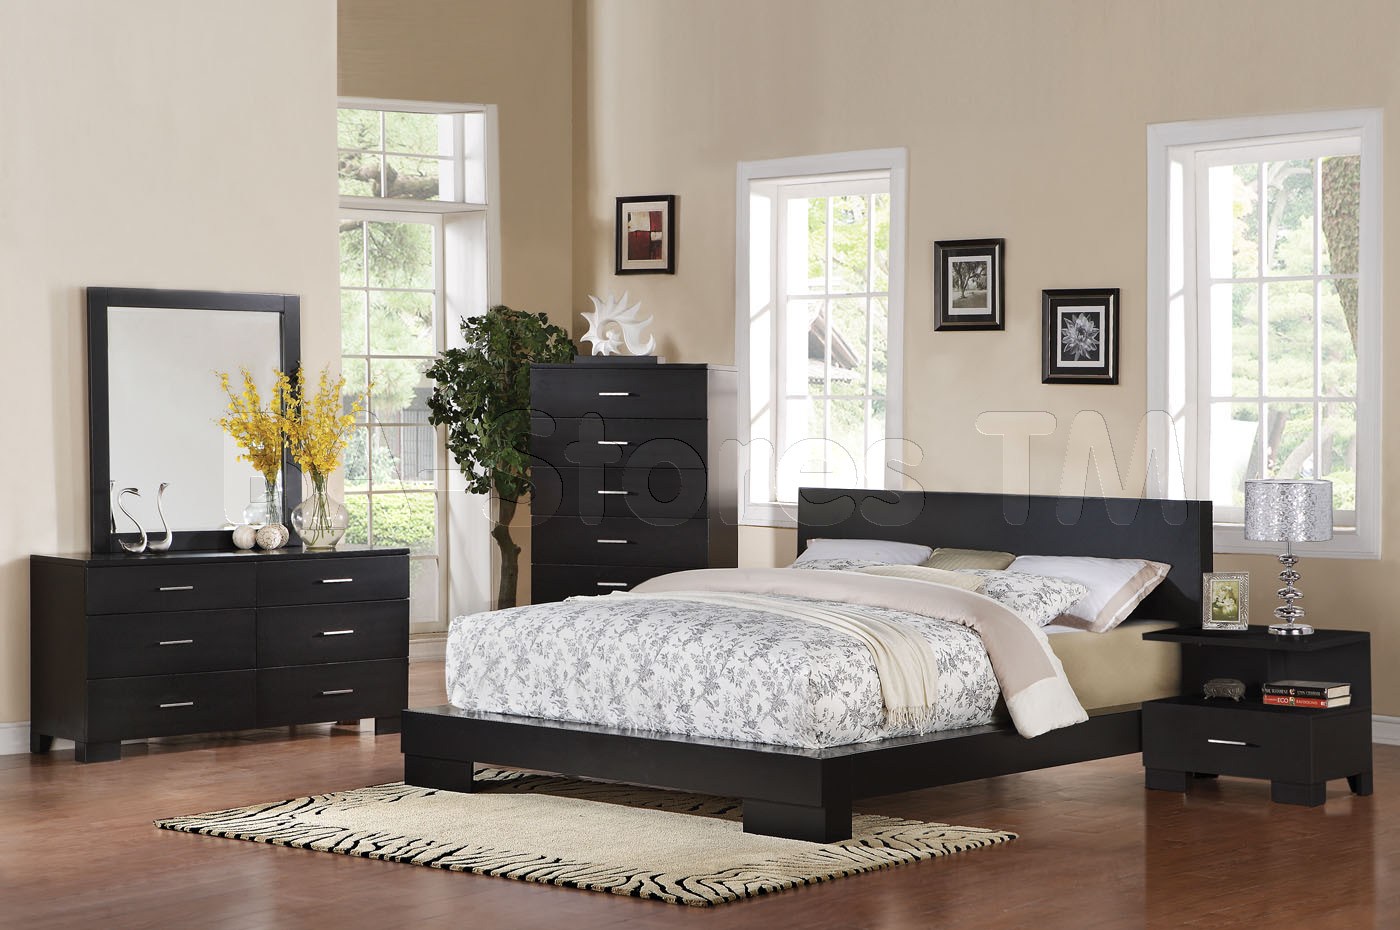 contemporary black lacquer bedroom furniture